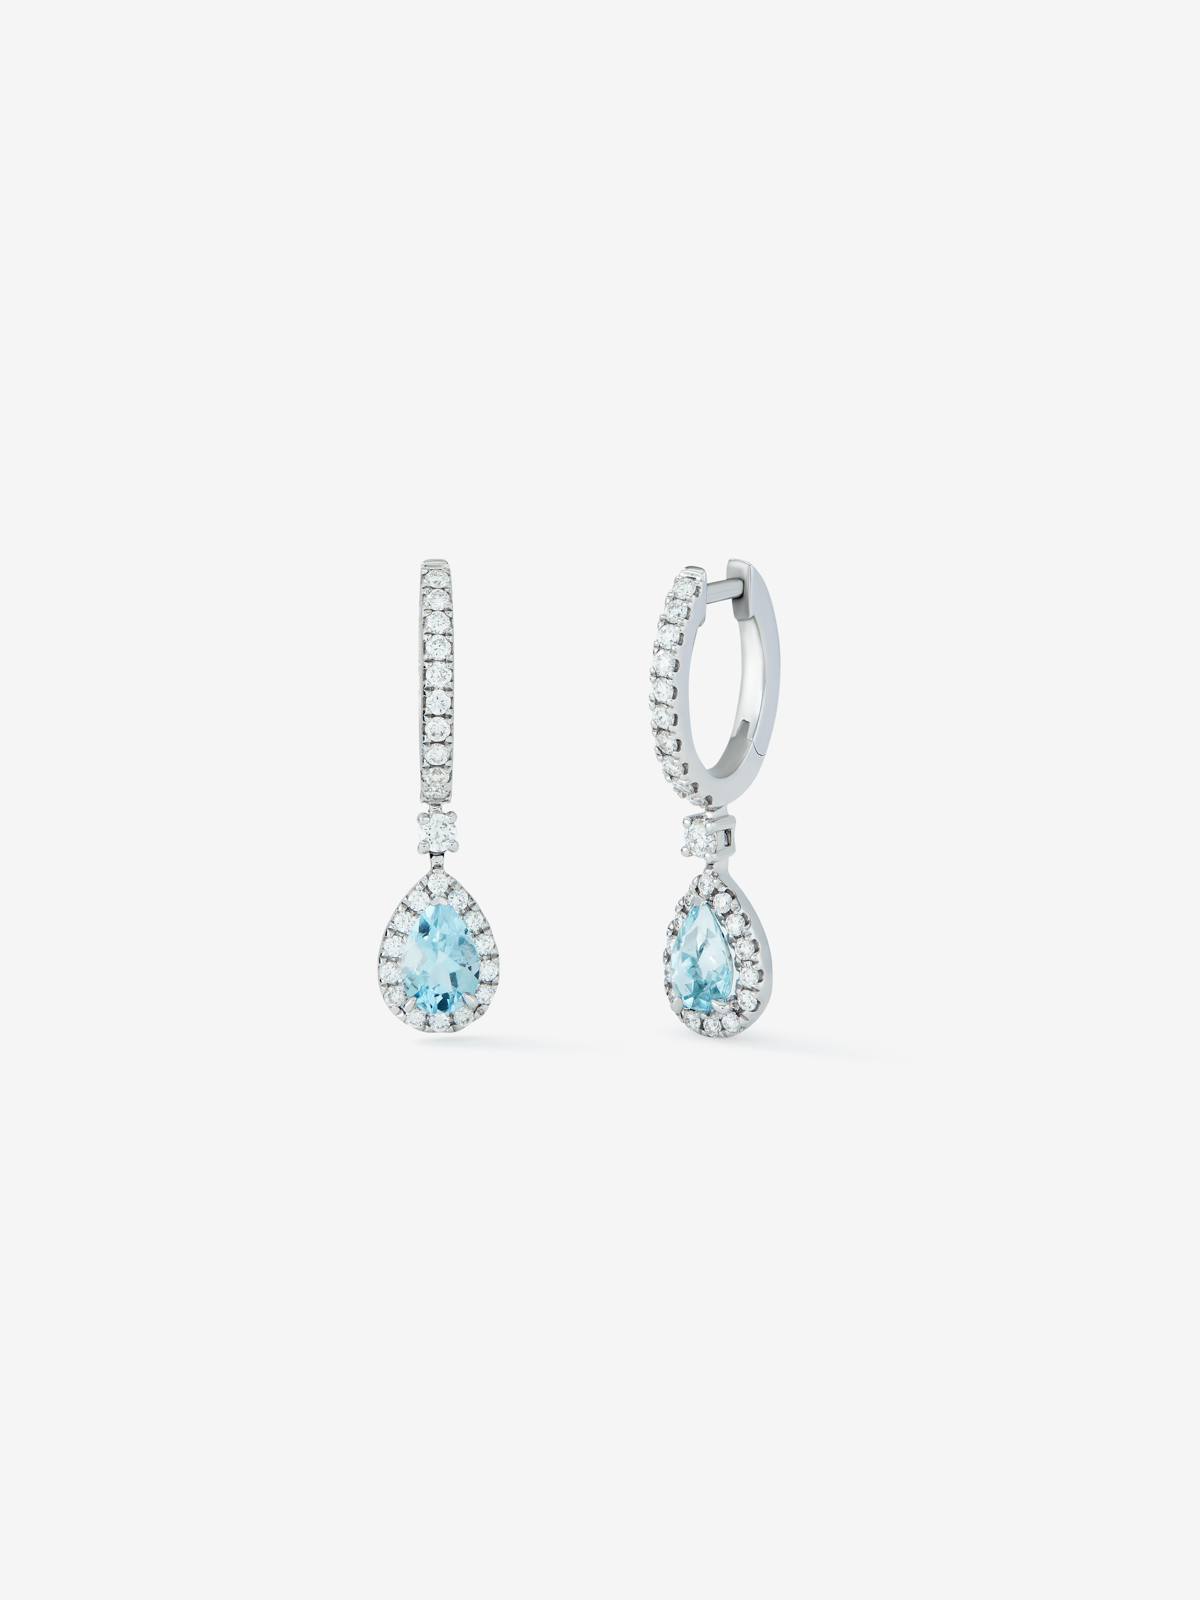 18K white gold hoop earrings with aquamarine and diamond pendant